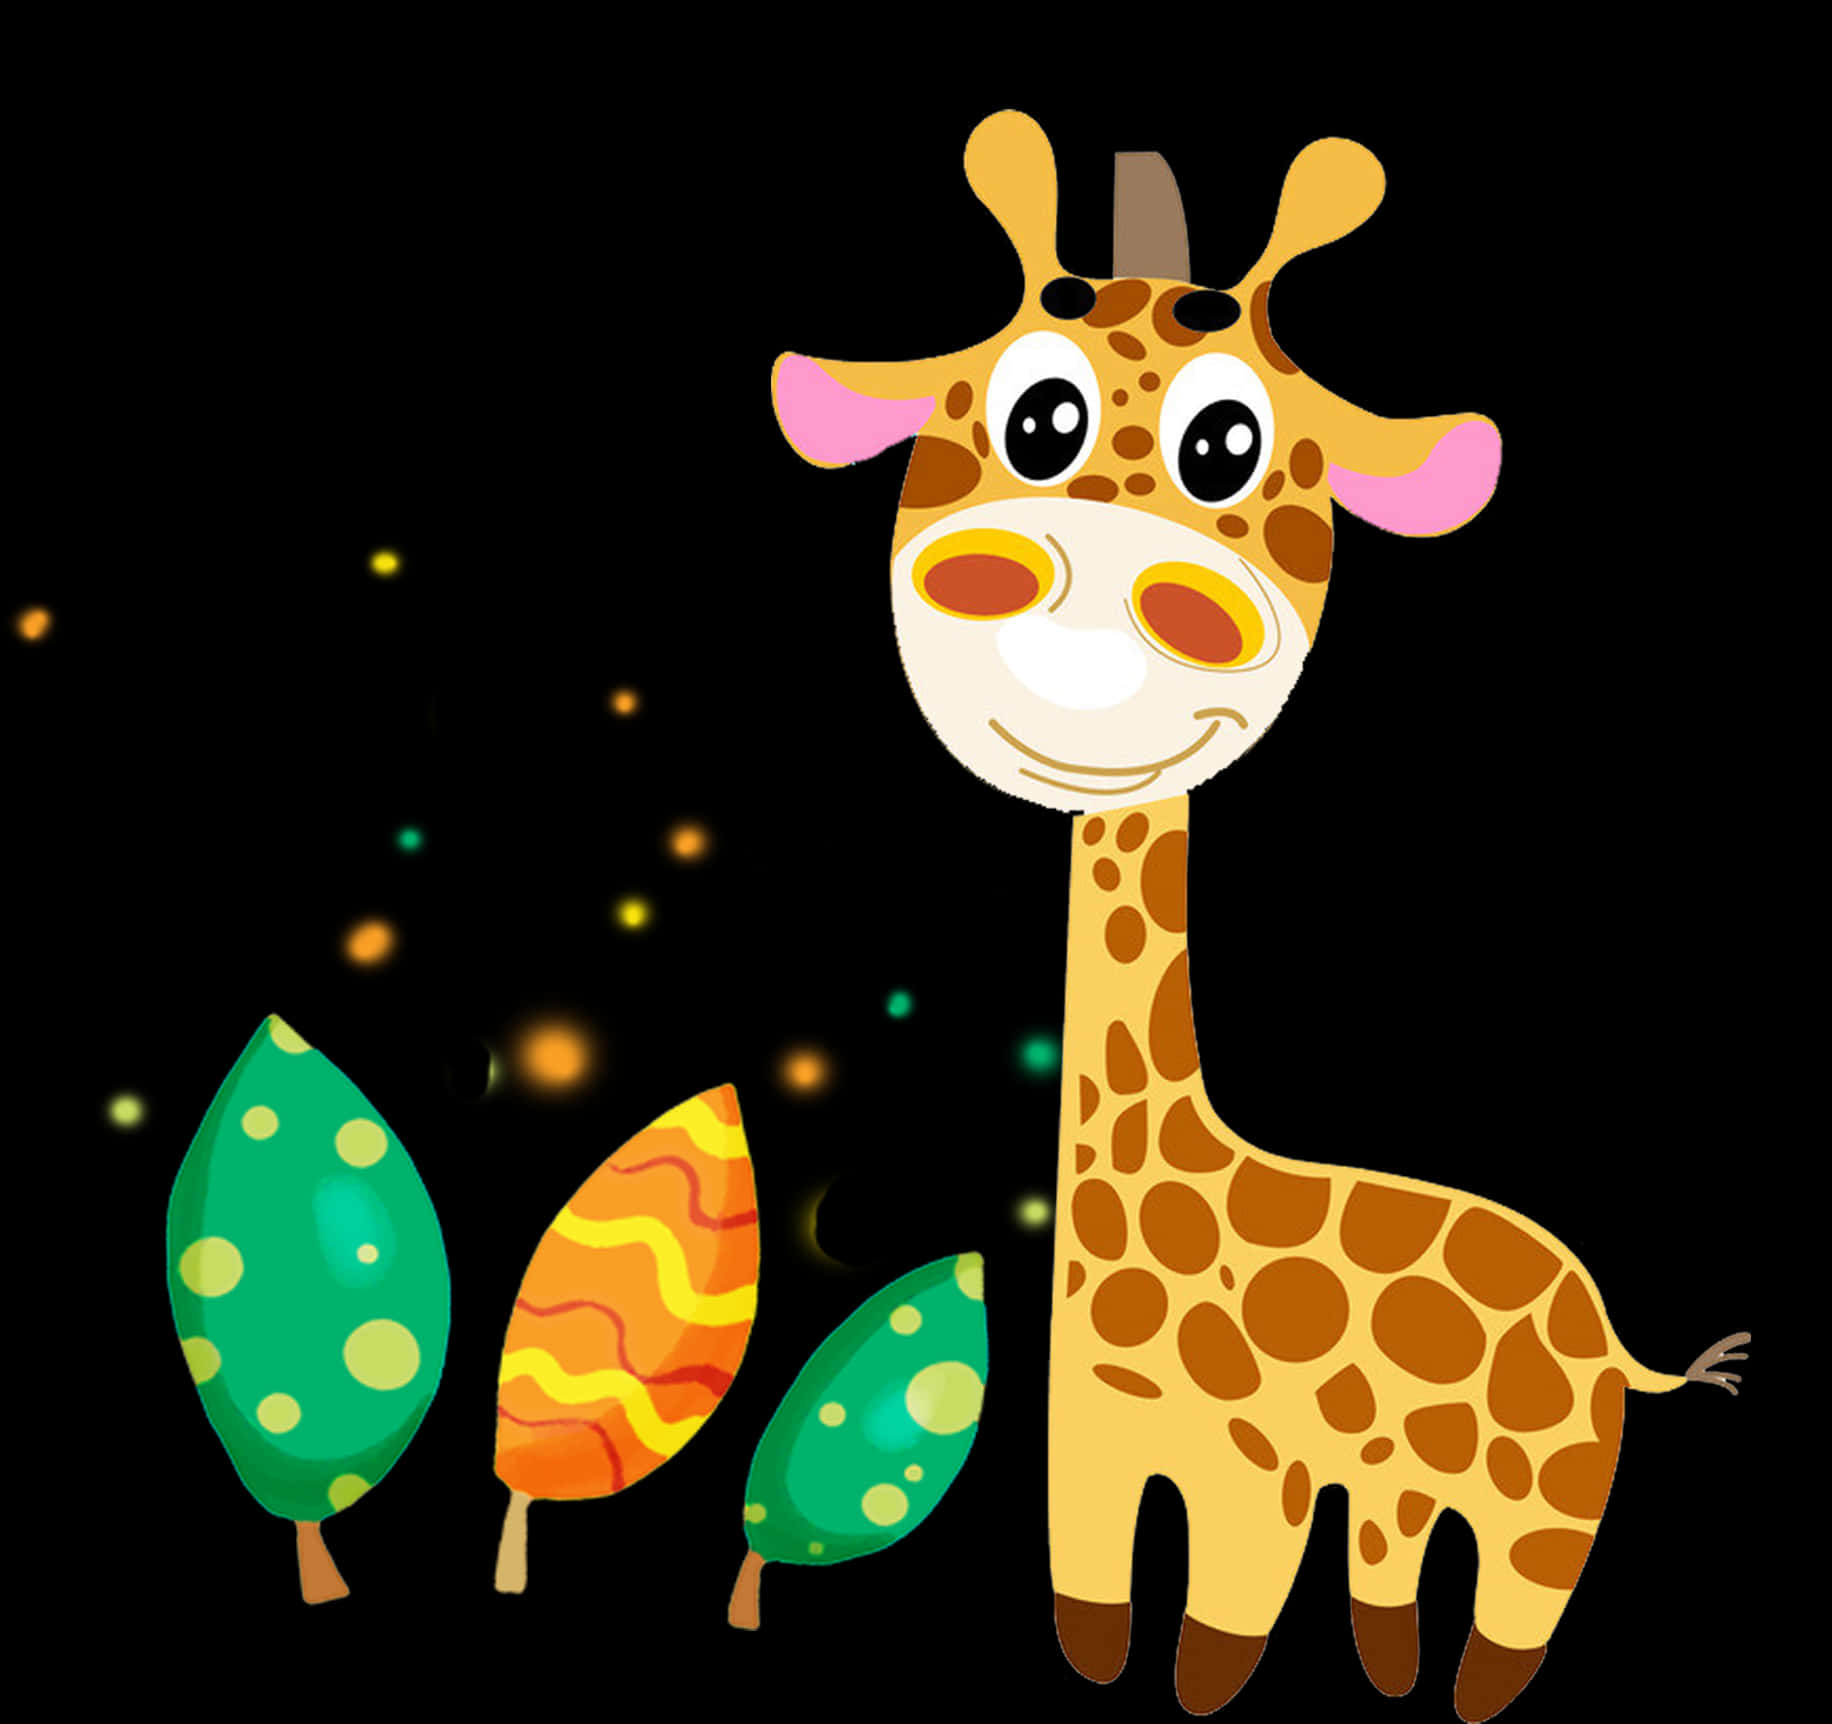 A Baby Giraffe Ready To Explore The World